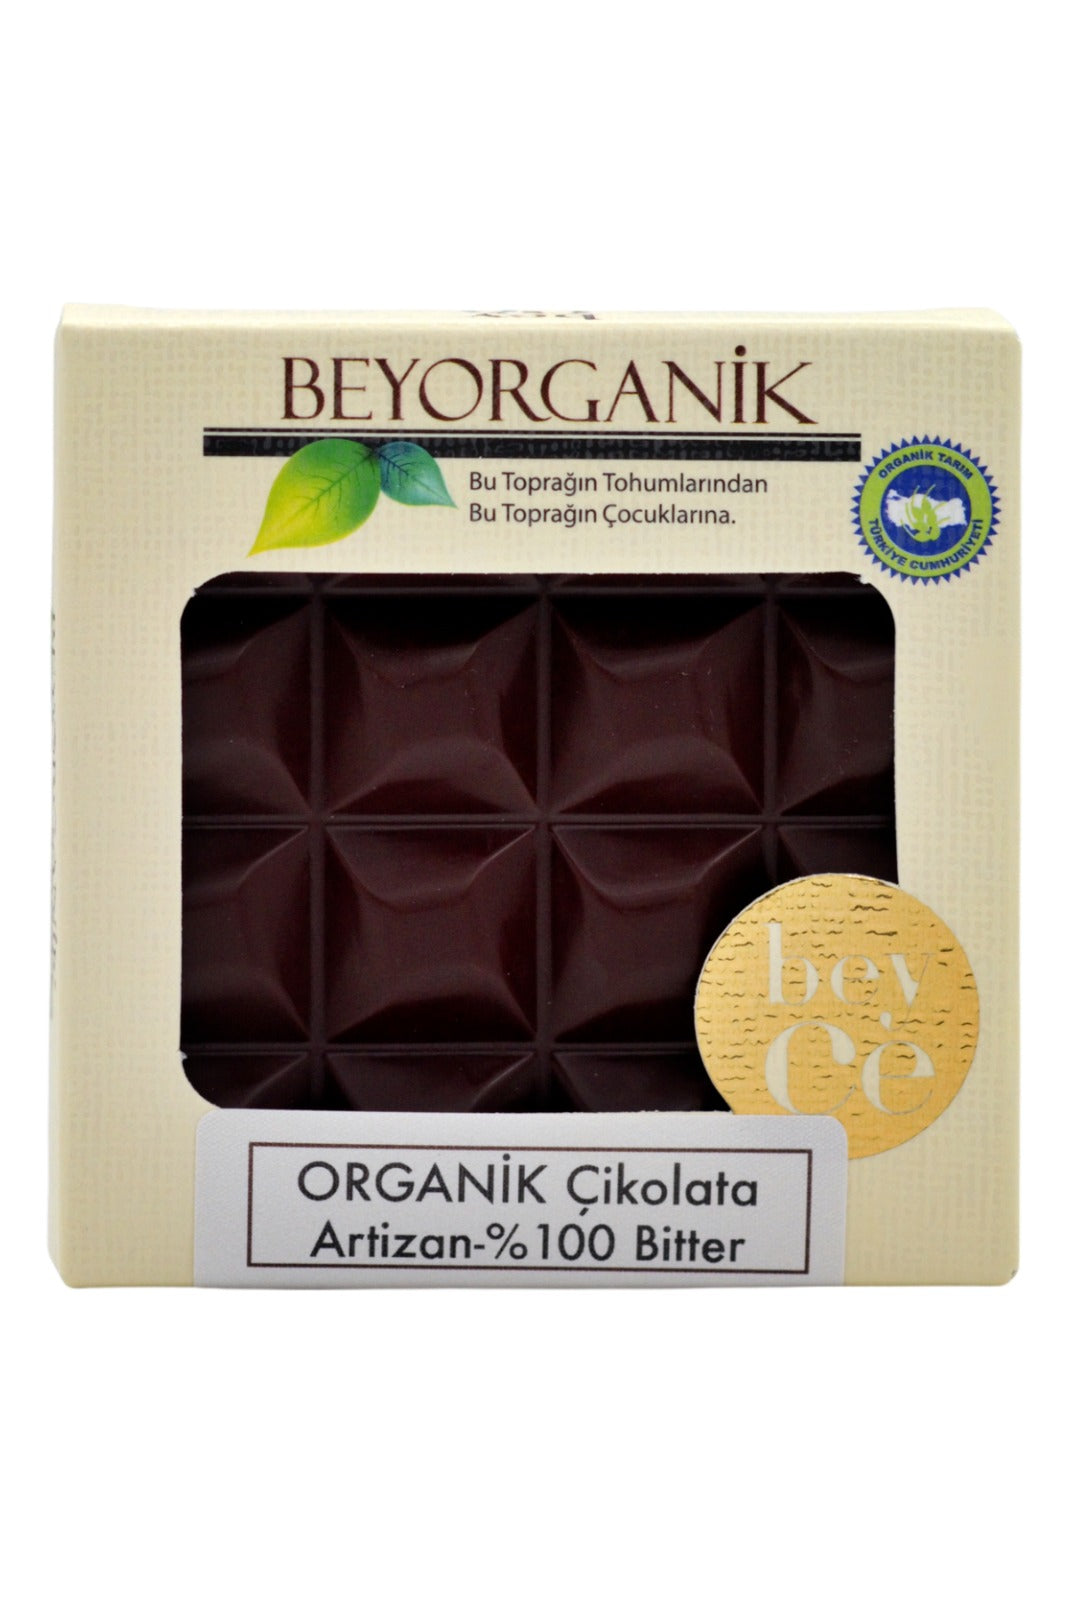 Organik Çikolata Artizan %100 Bitter 40 gr